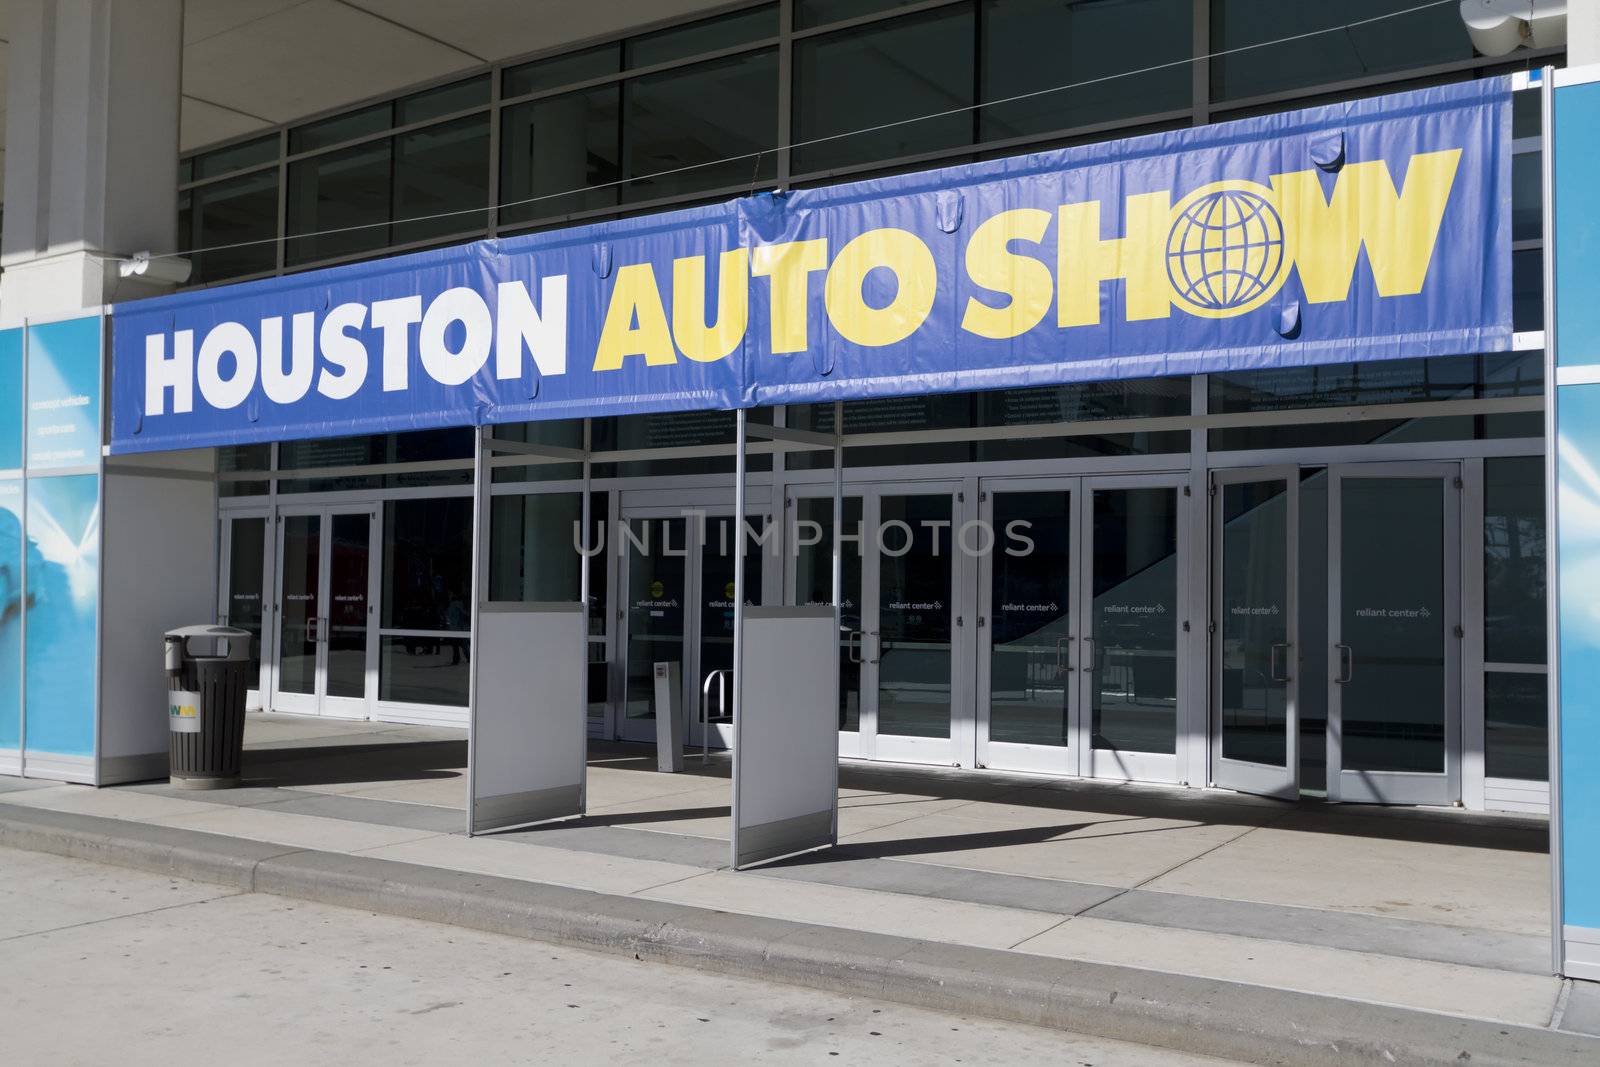 Houston Autoshow Entrance by Moonb007